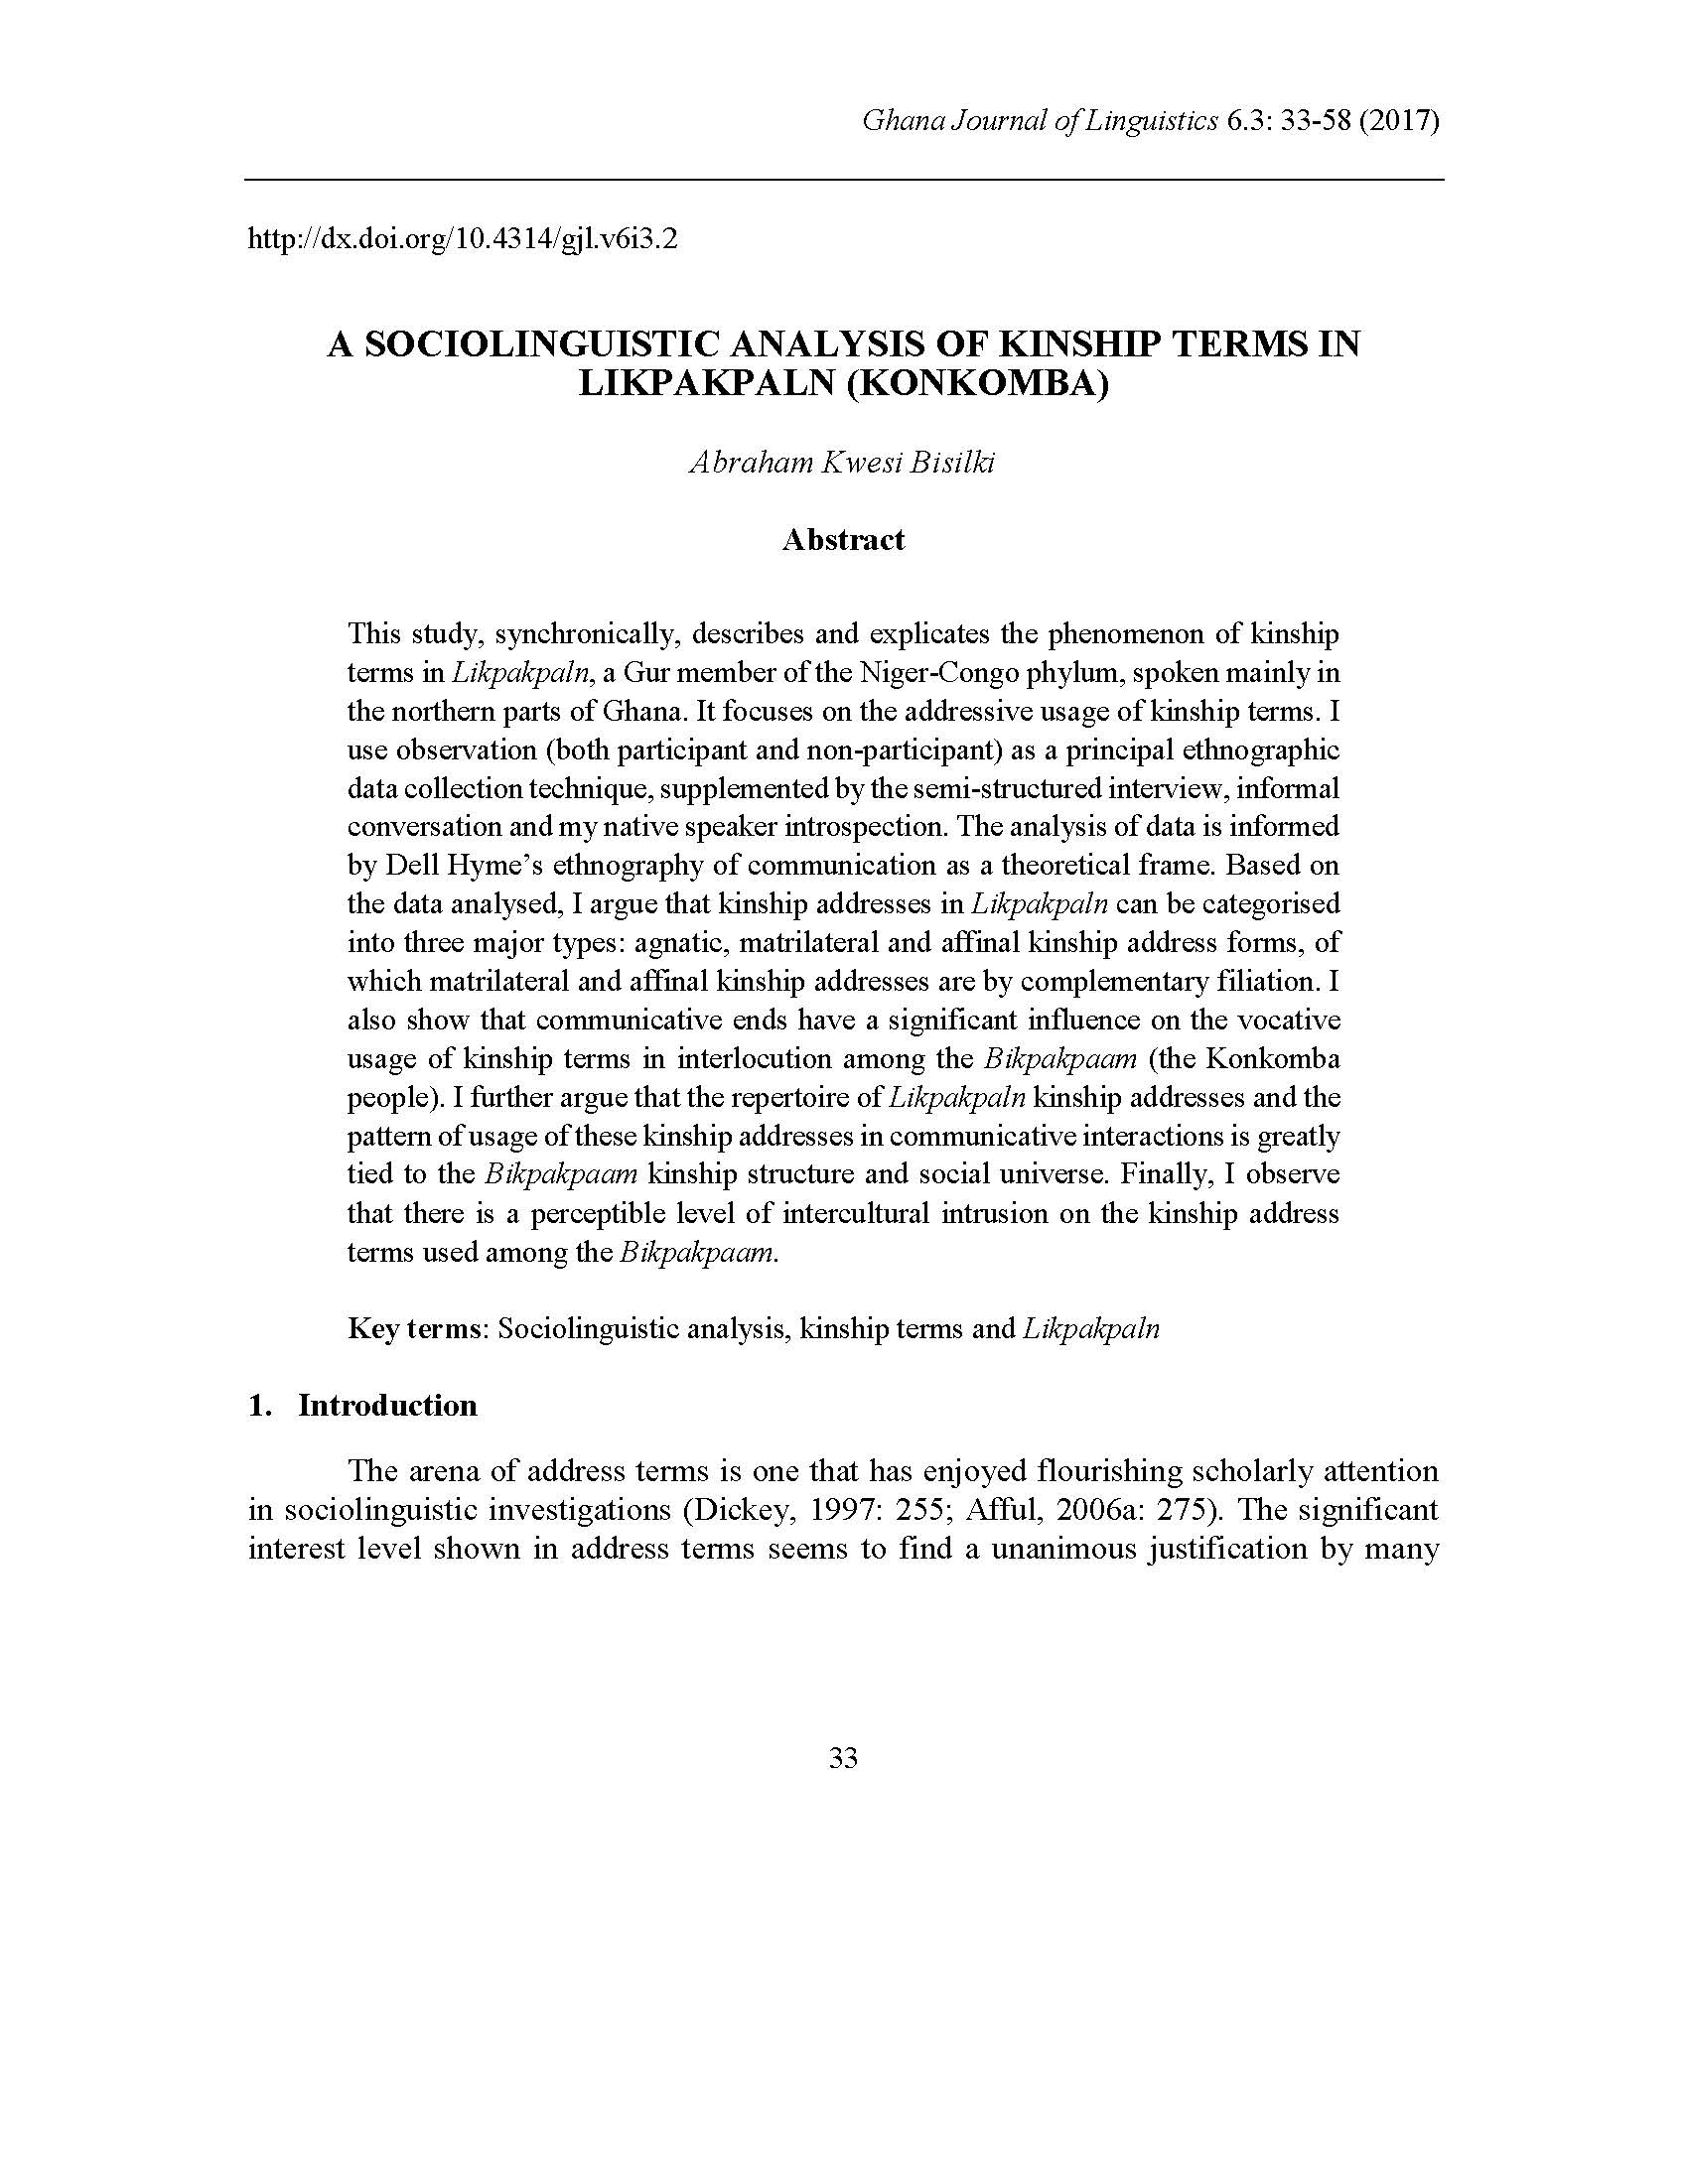 Bisilki: A Sociolinguistic Analysis of Kinship Terms in Likpakpaln (Konkomba)